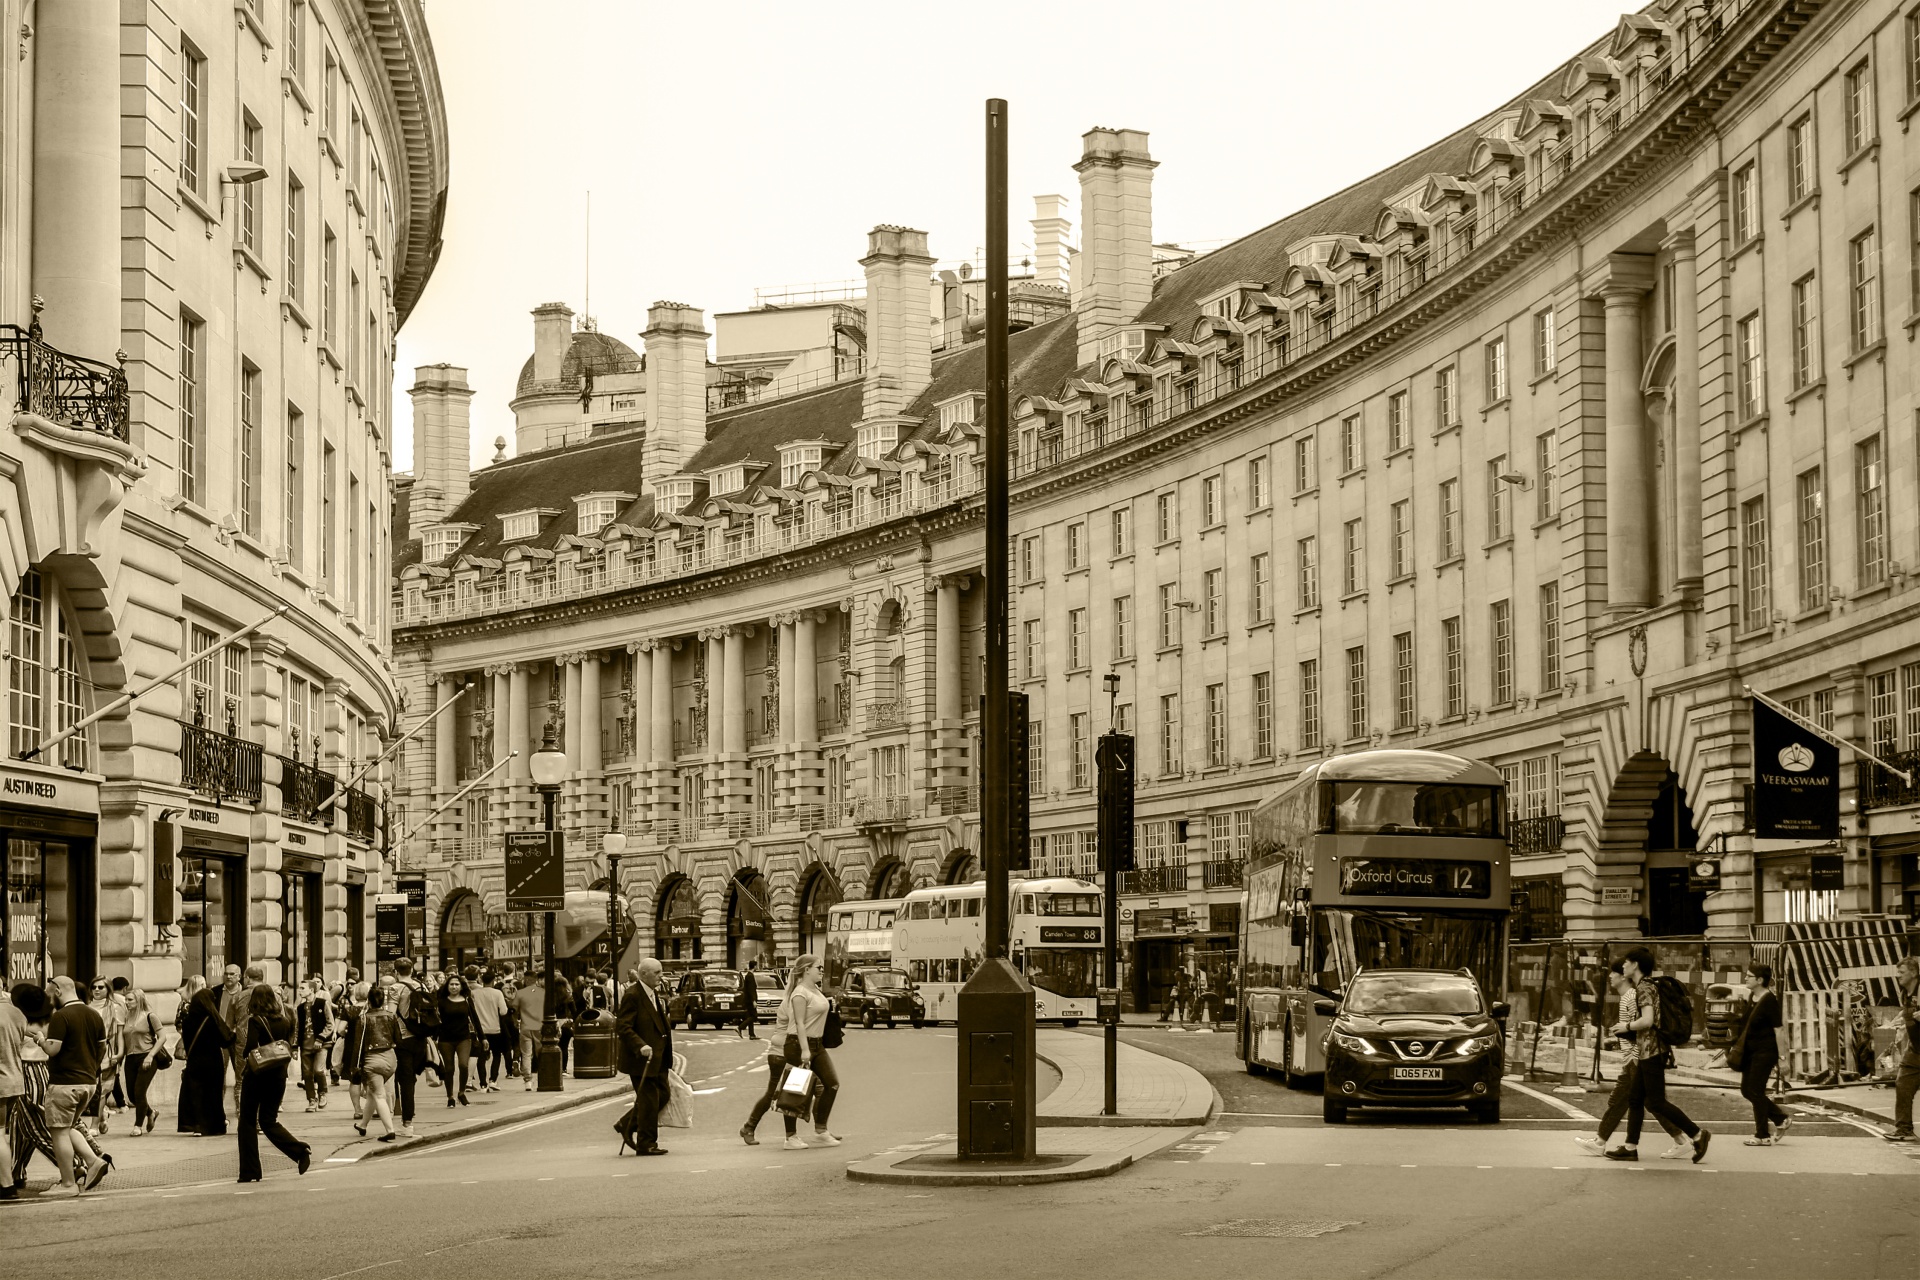 London street sepia image